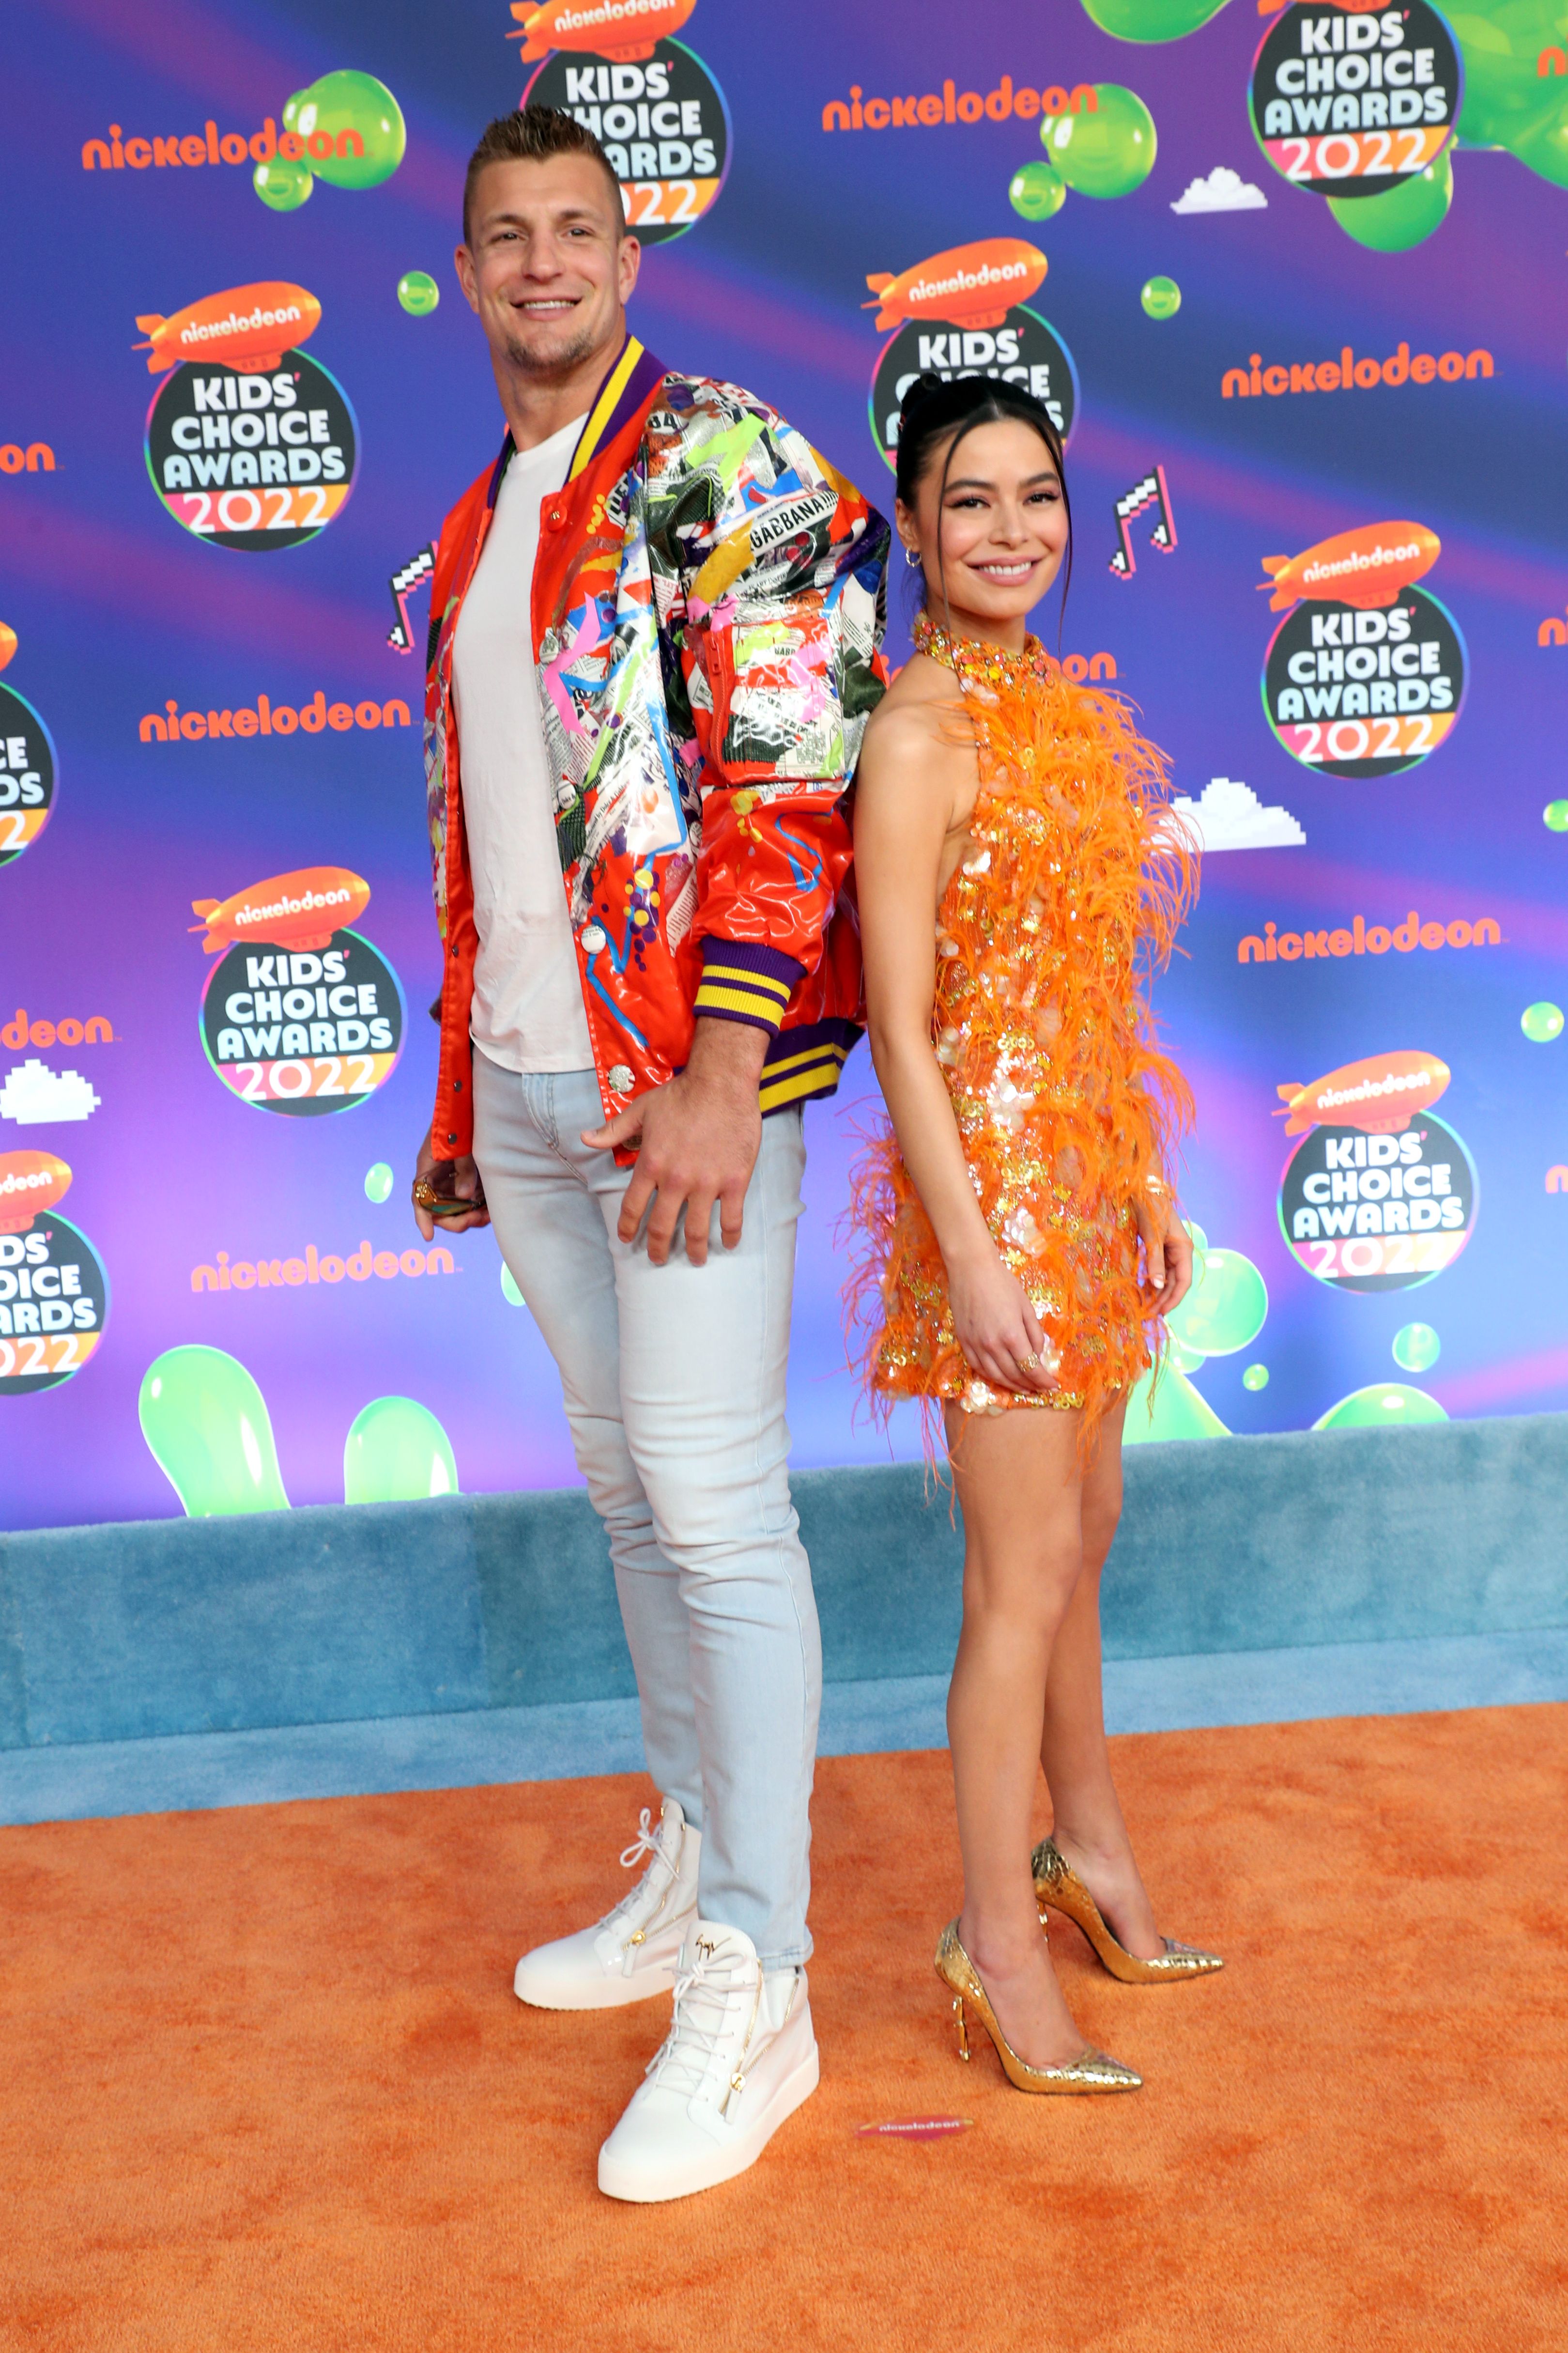 Winners from Nickelodeon Kids' Choice Awards 2022